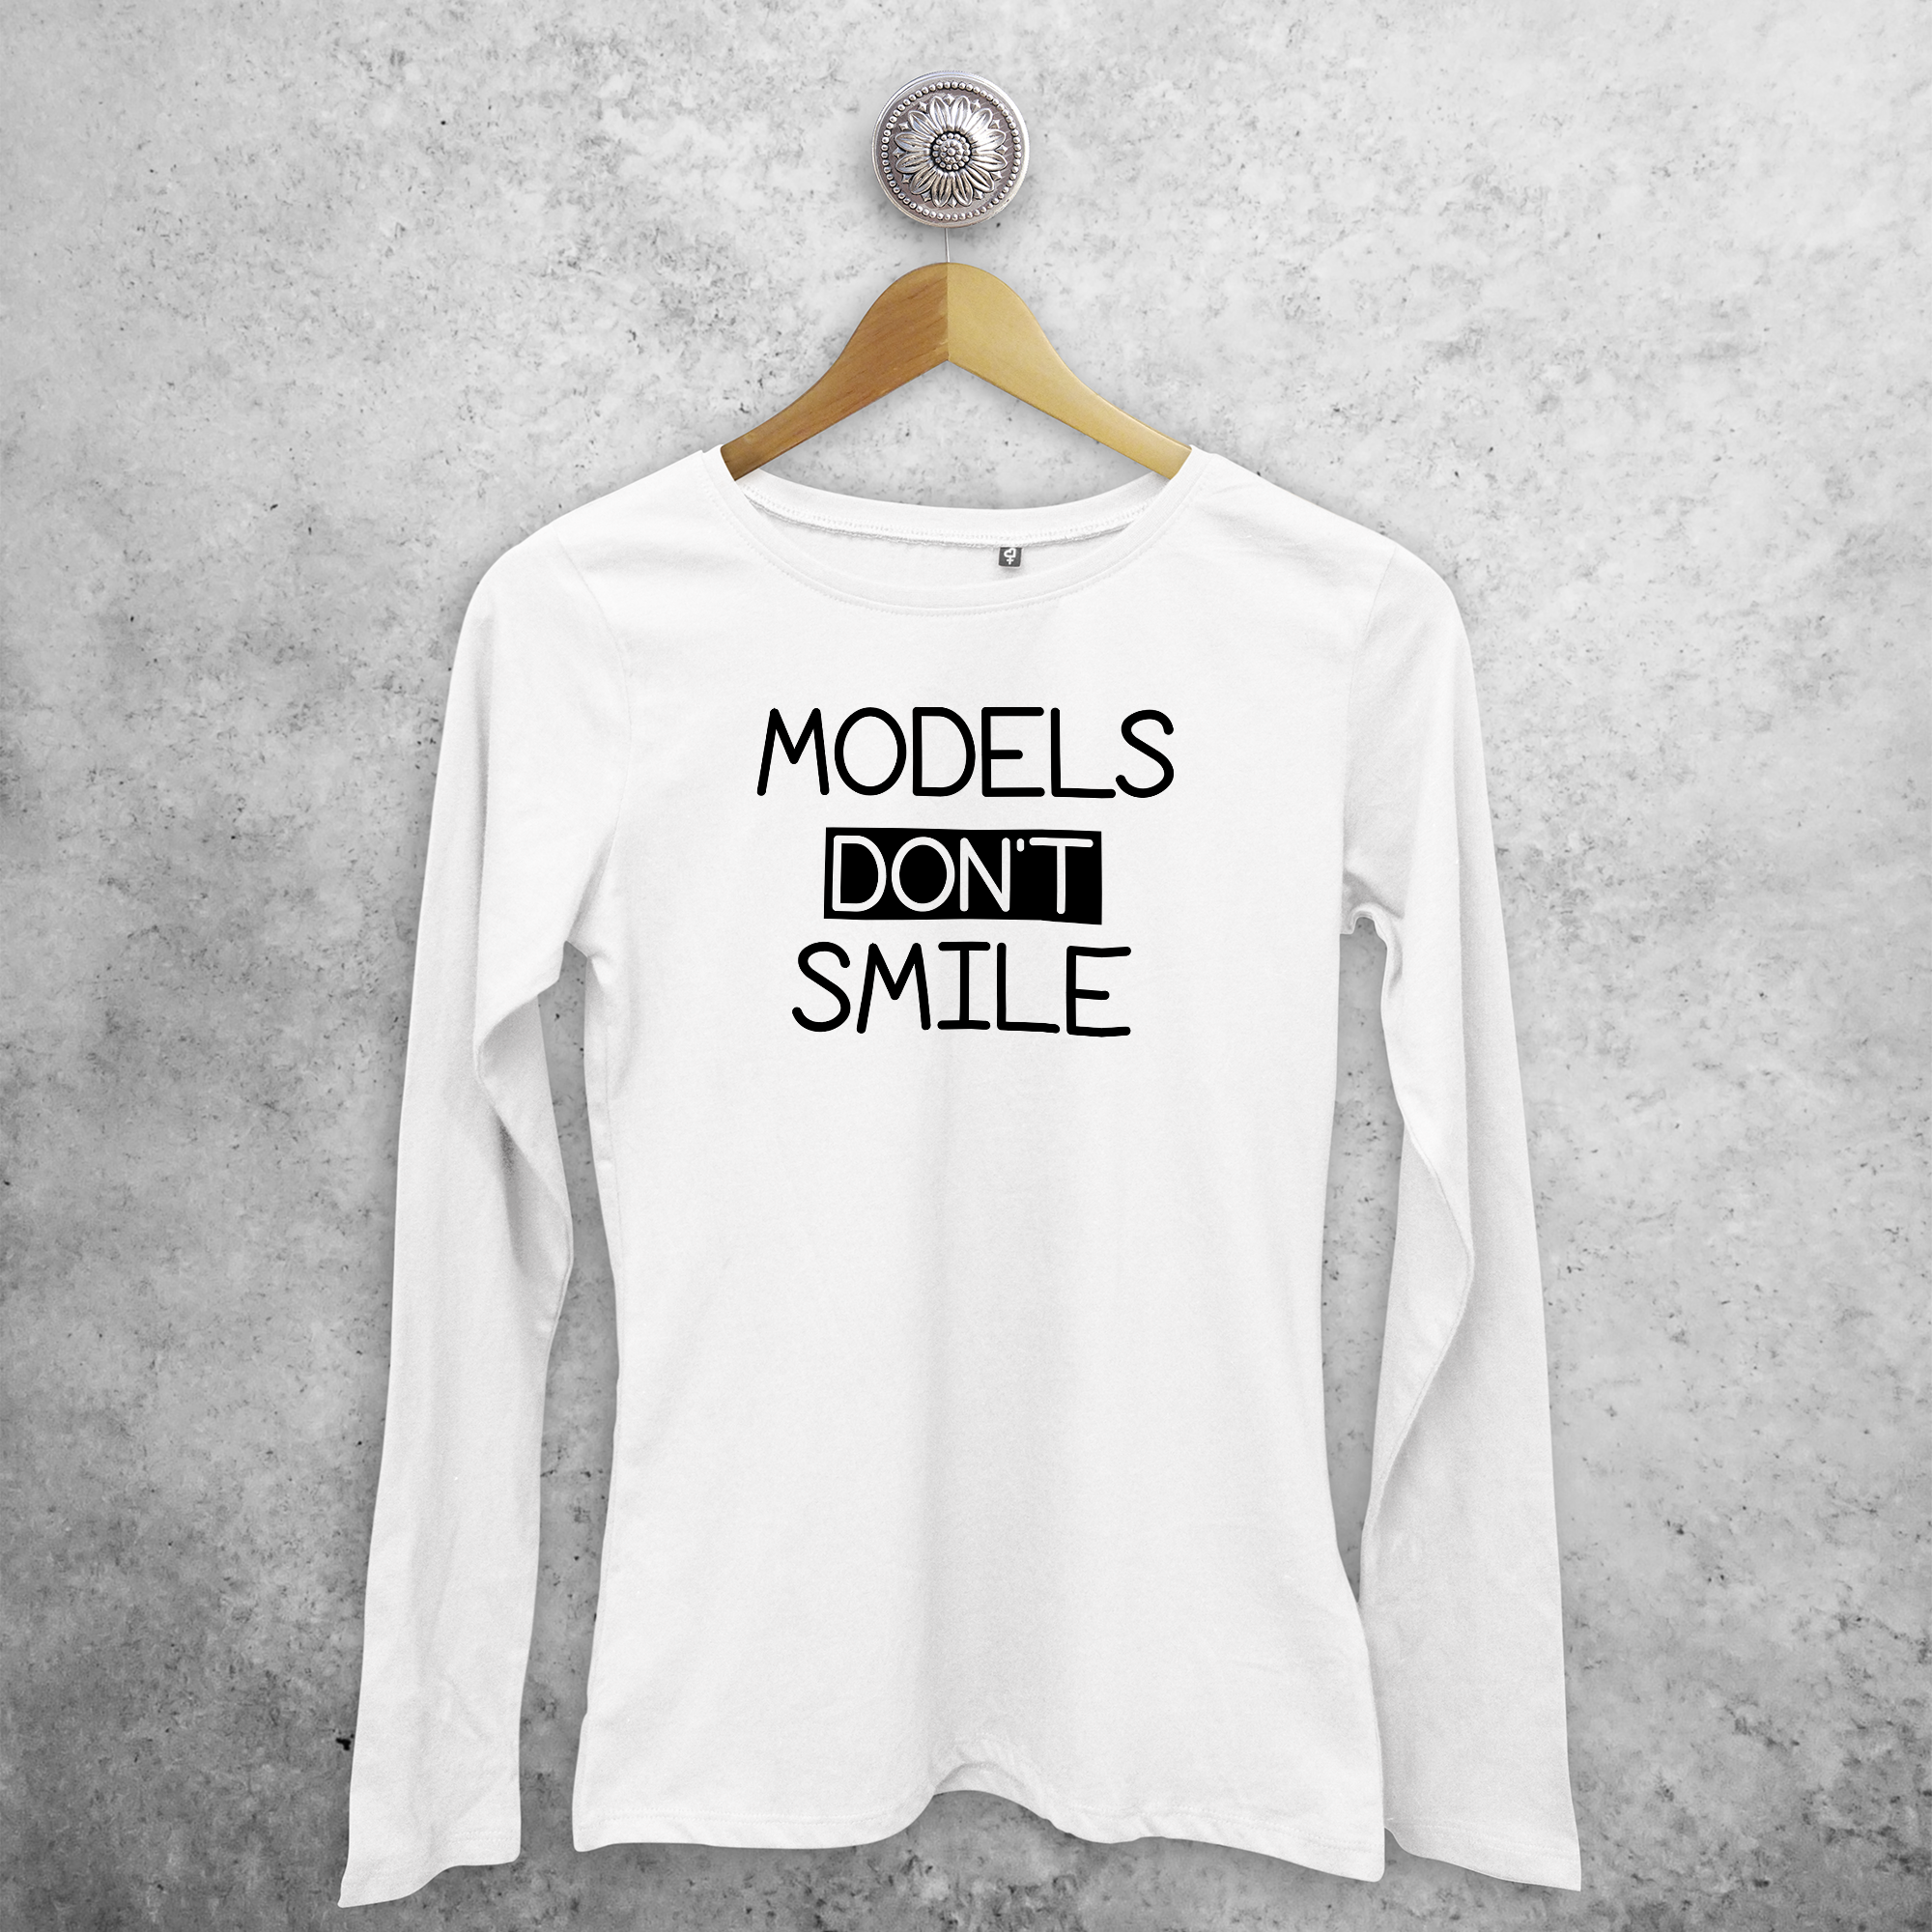 'Models don't smile' adult longsleeve shirt